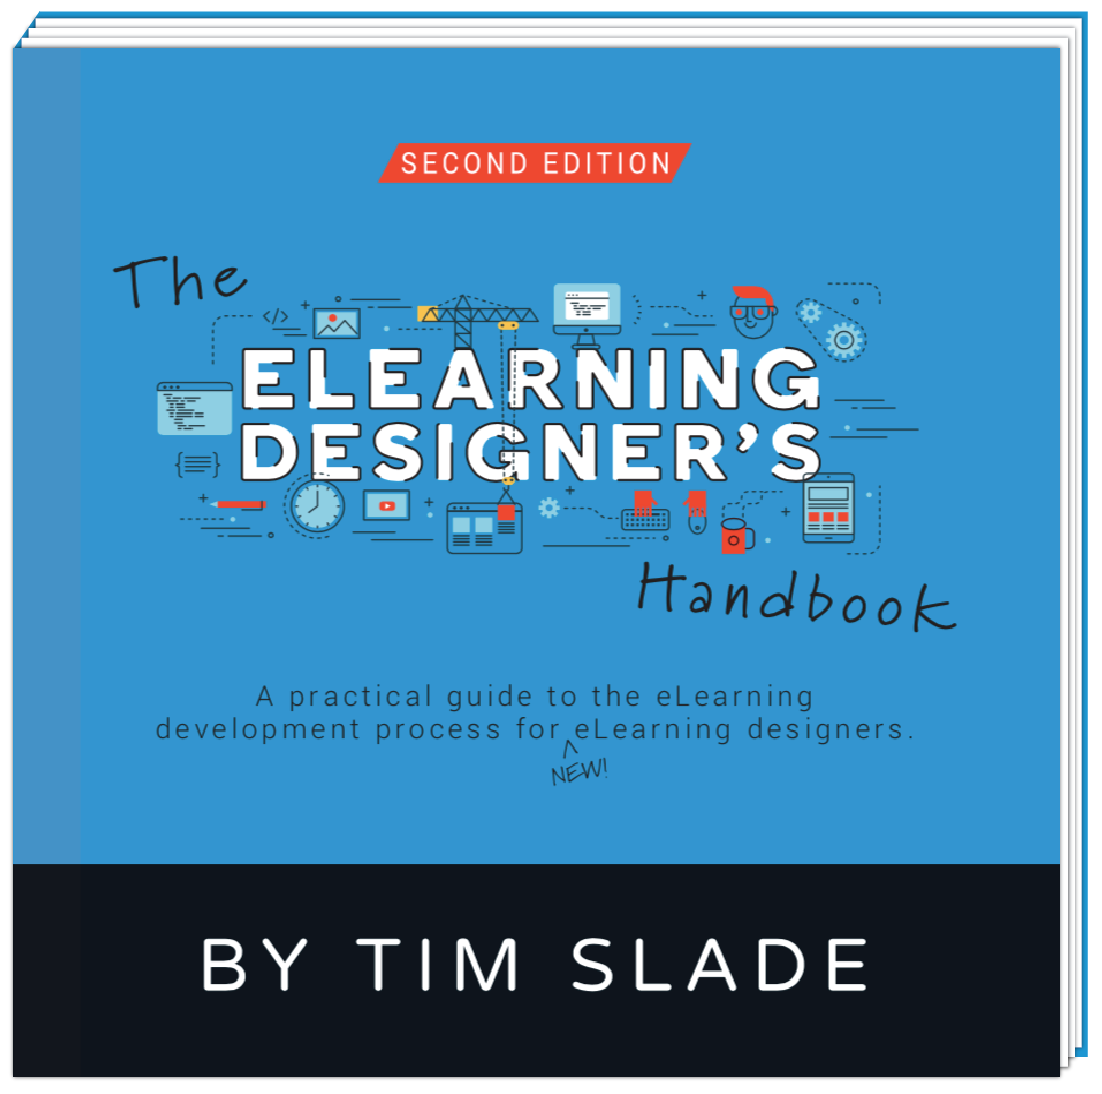 The eLearning Designer's Handbook Second Edition by Tim Slade